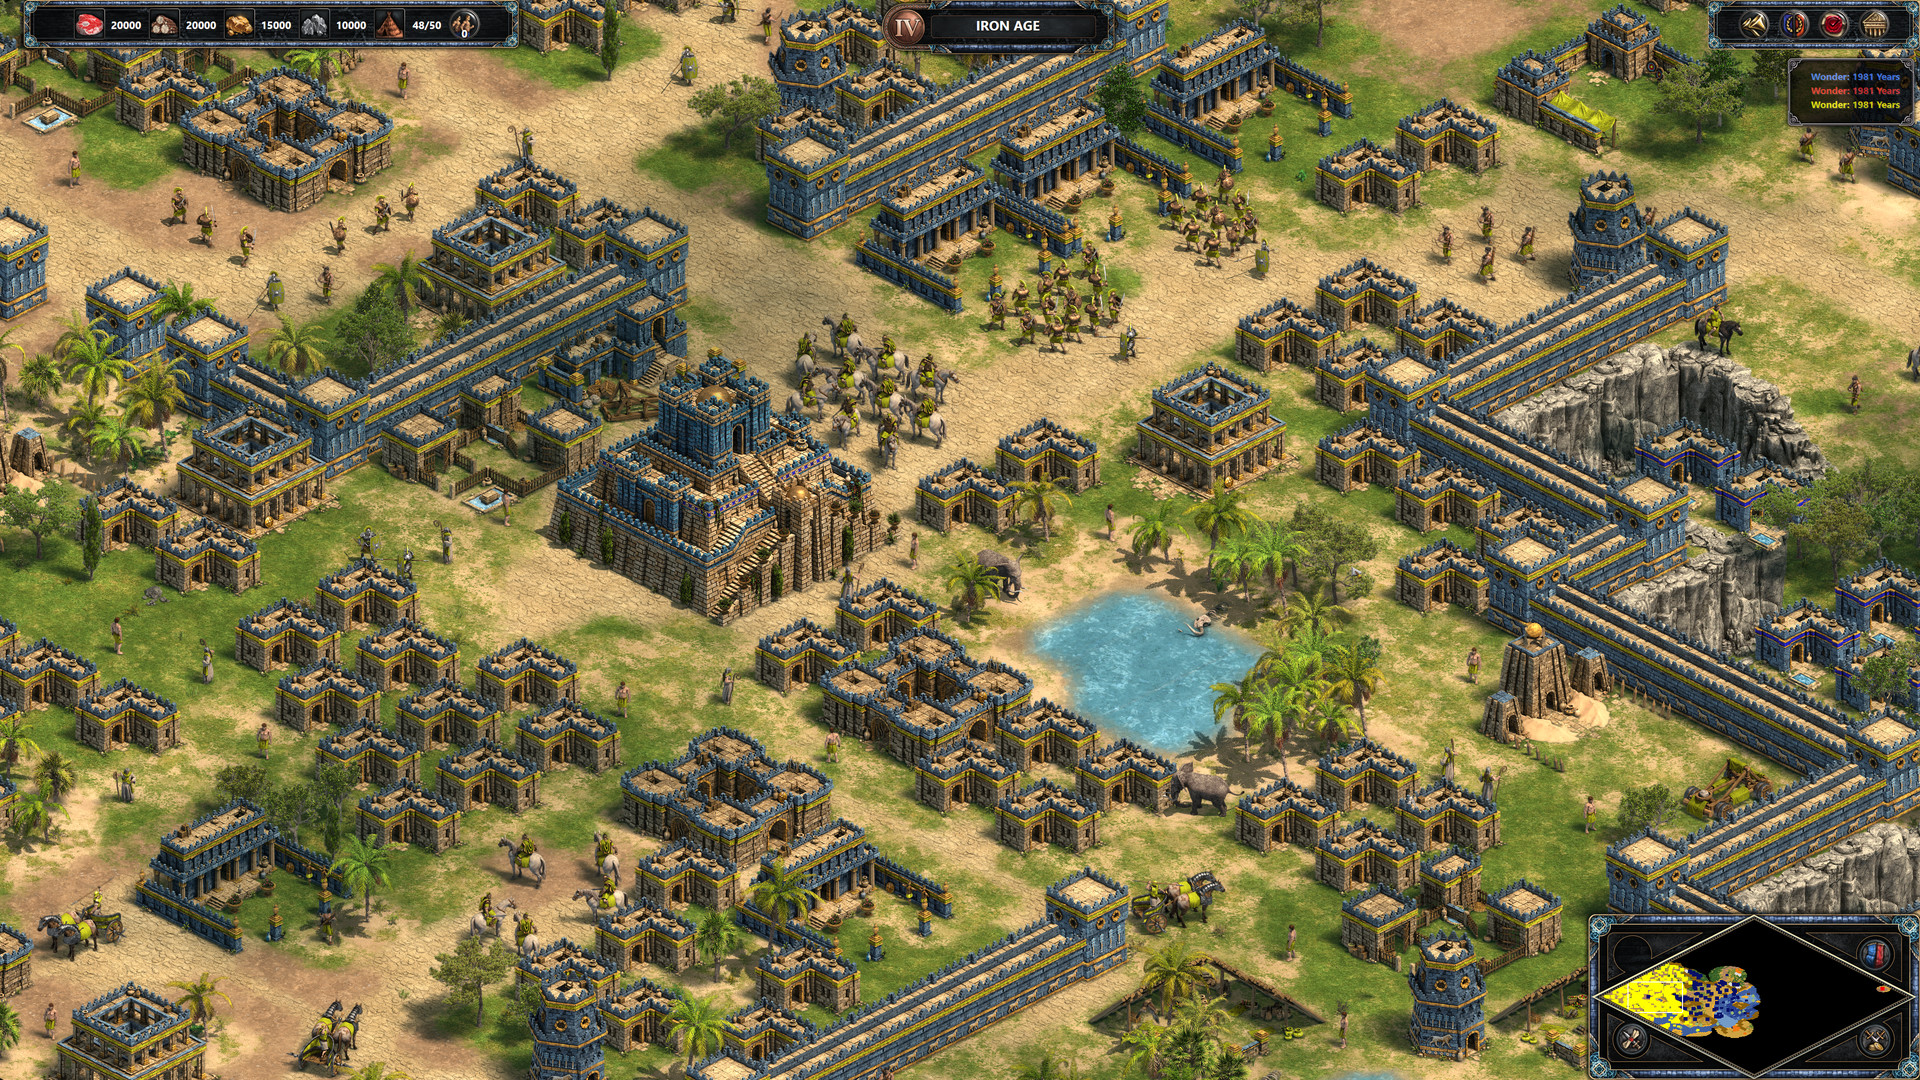 Age Of Empires 4 Mac Download Ita